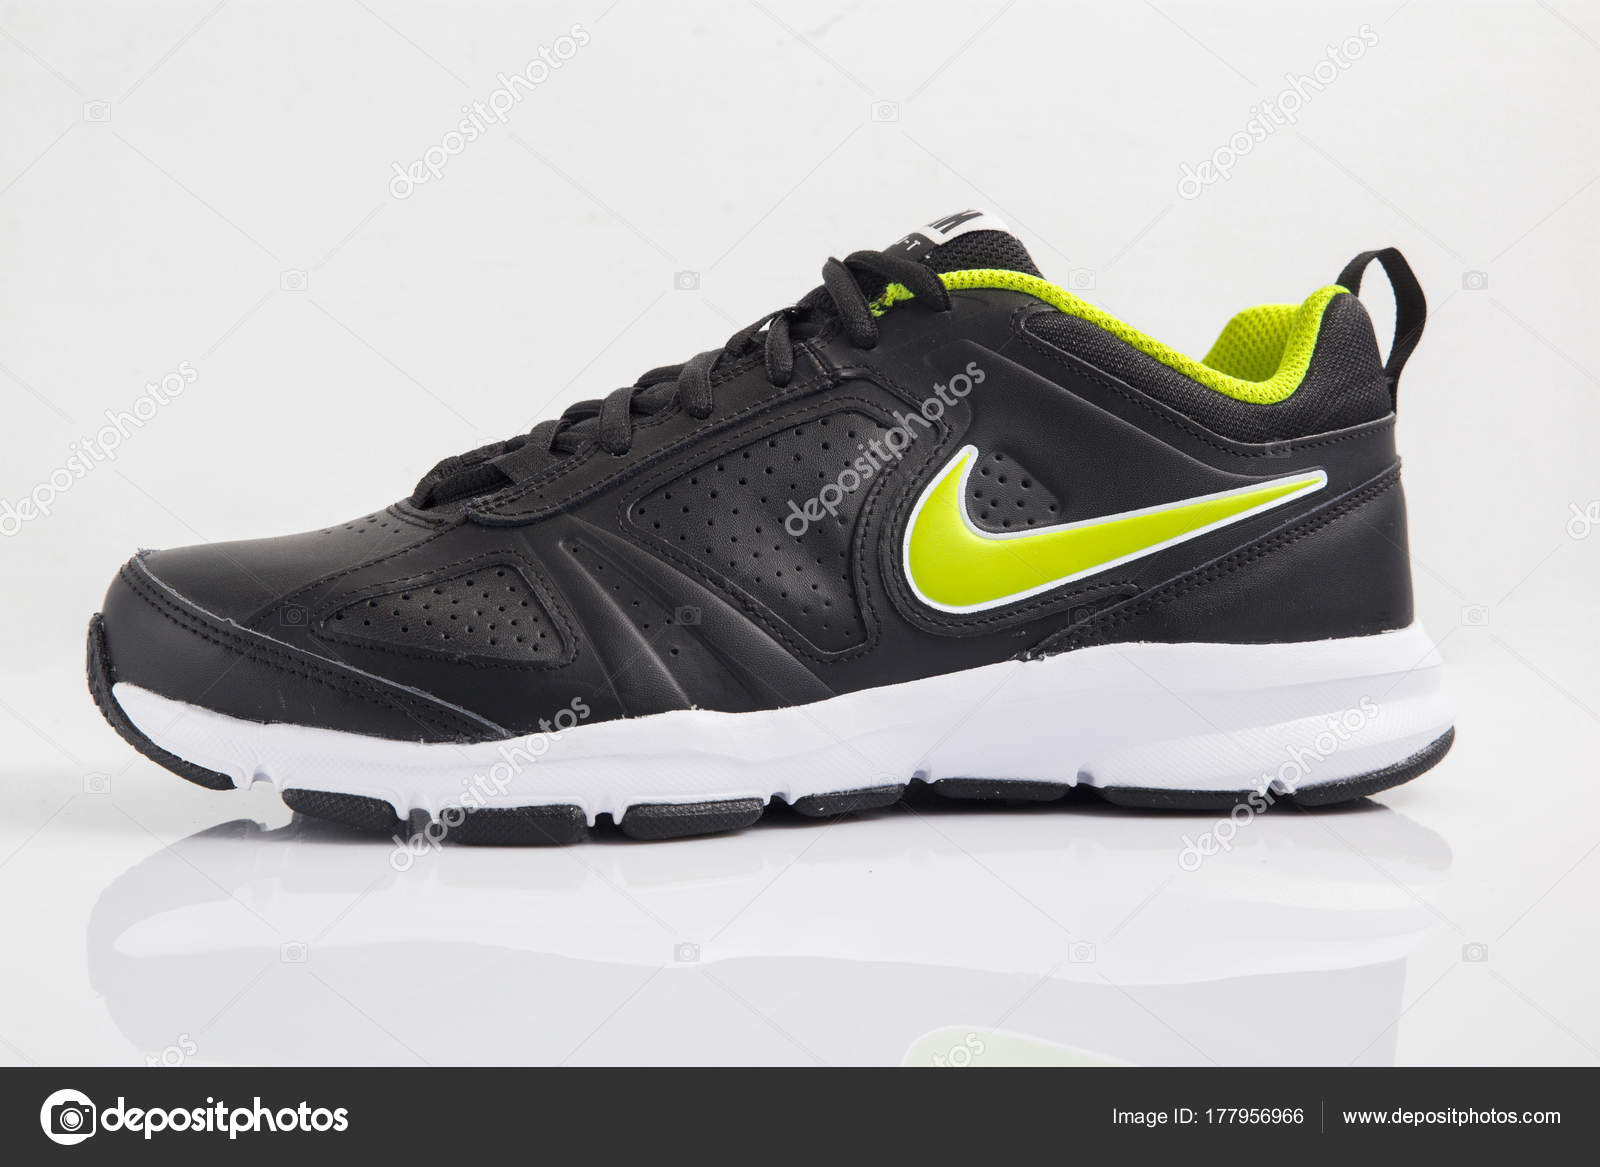 Oppervlakte buffet kleding stof Afife Portugal December 2017 Nike Running Boots Nike Multinational Company  – Stock Editorial Photo © georgevieirasilva #177956966